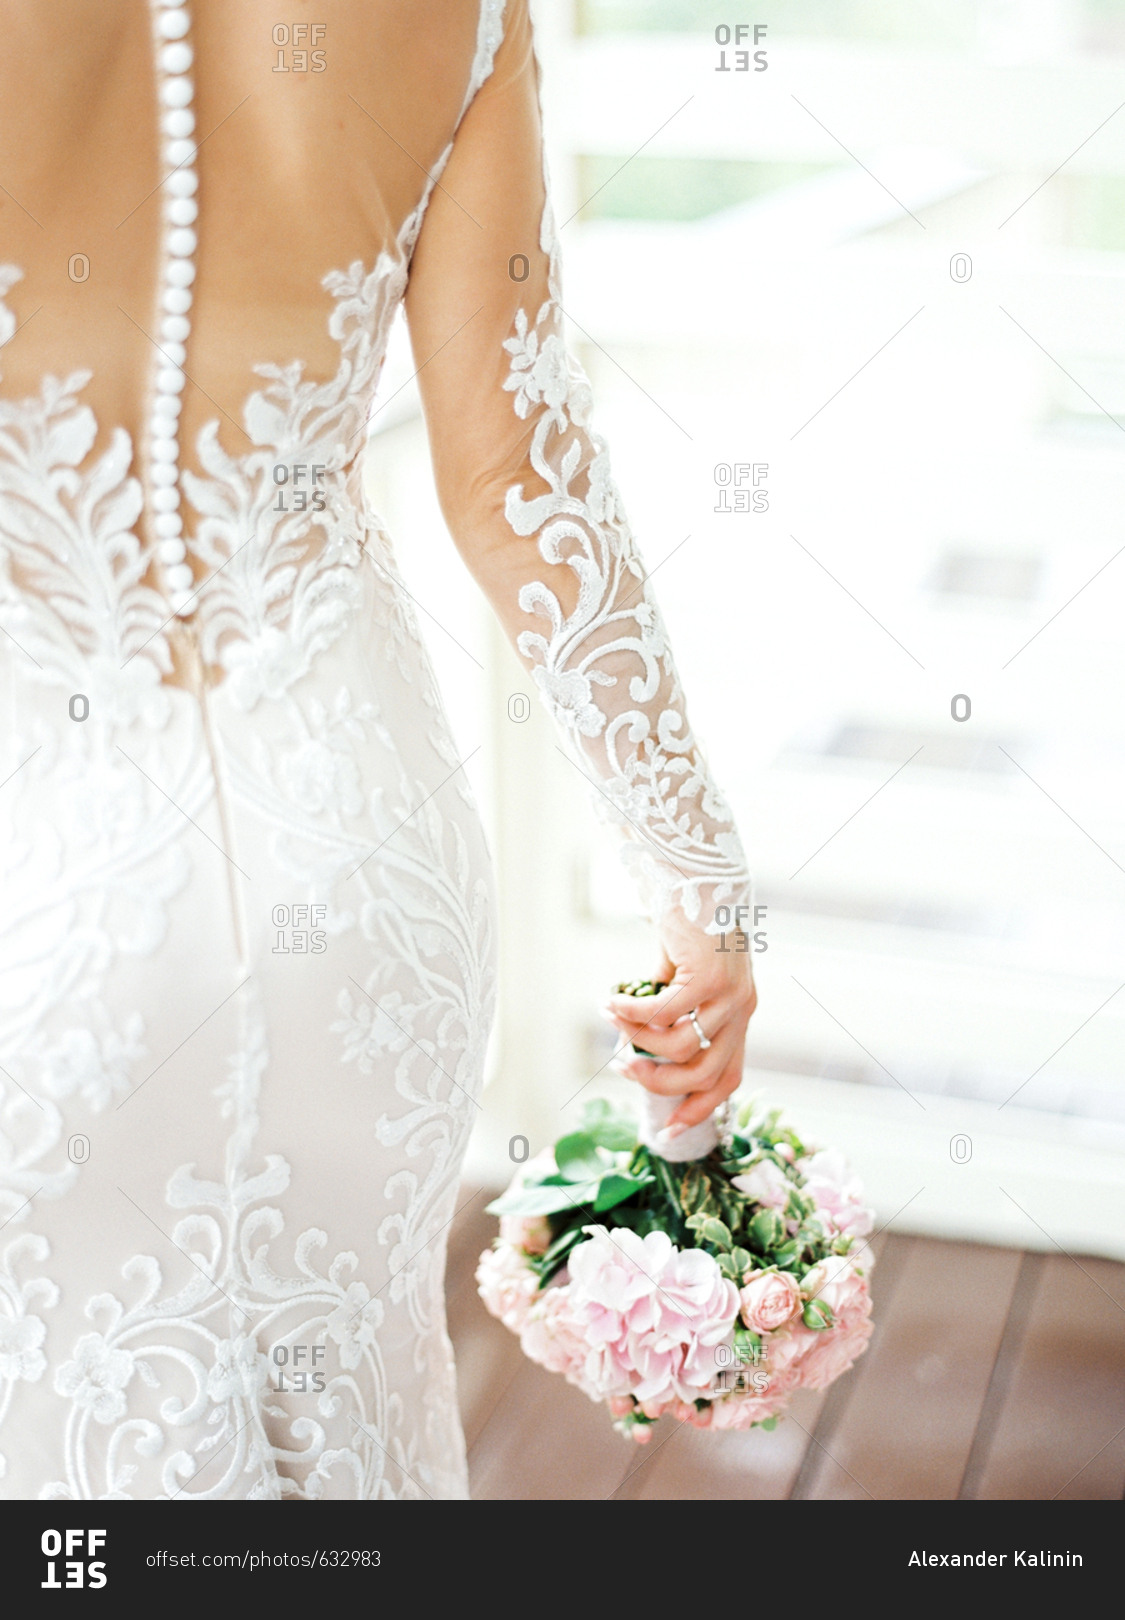 Bride walking away holding bridal bouquet